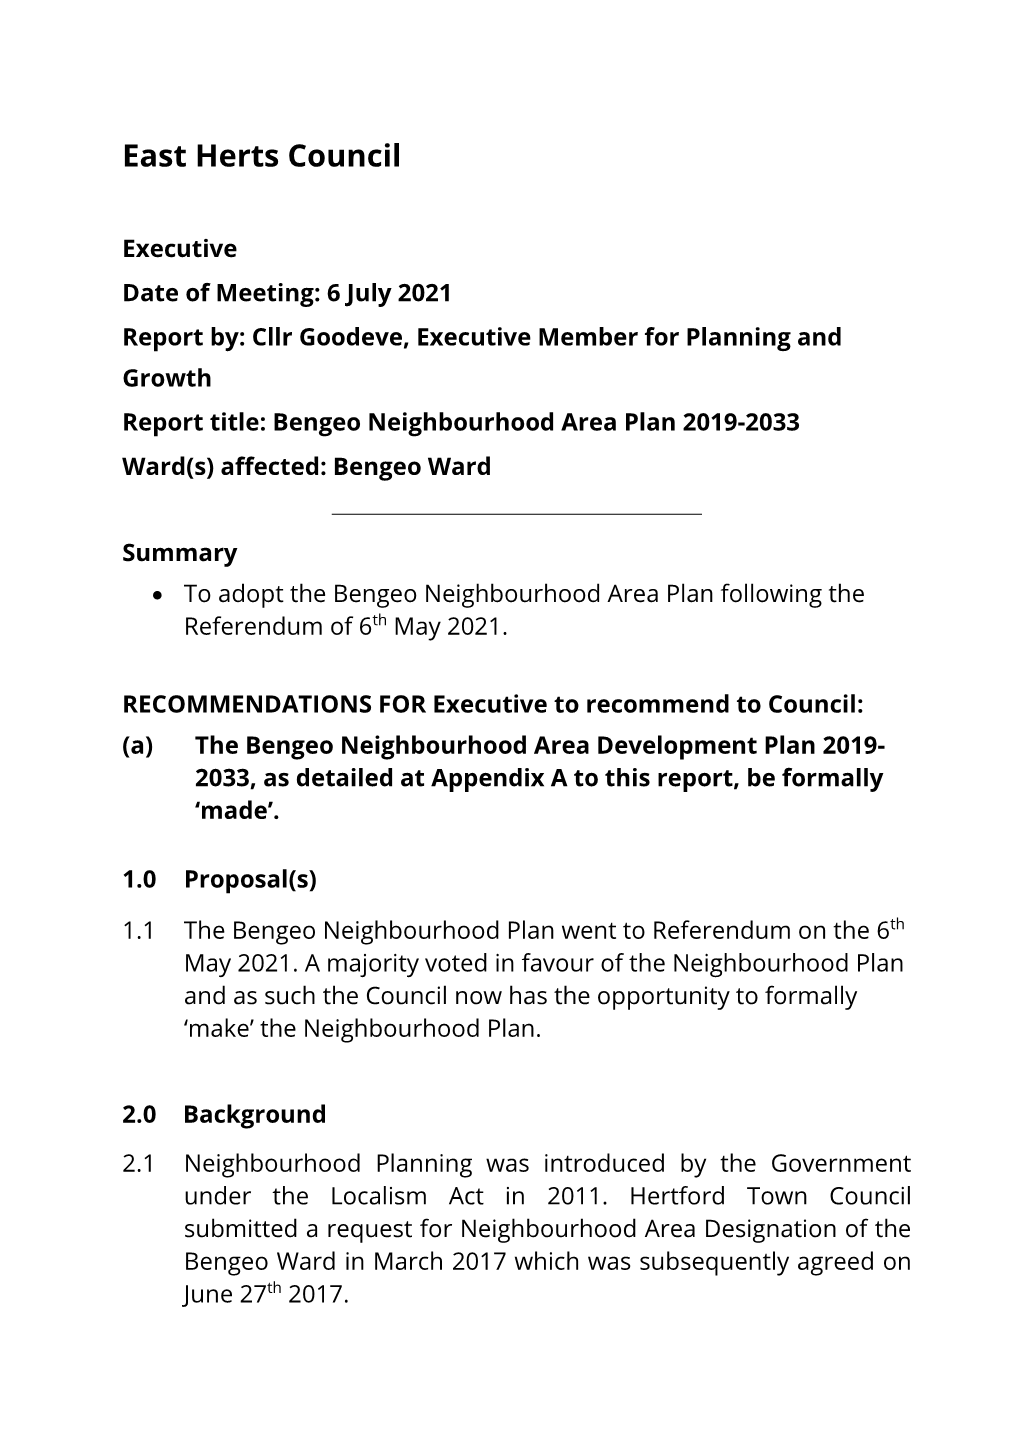 Adoption of Bengeo Neighbourhood Area Plan